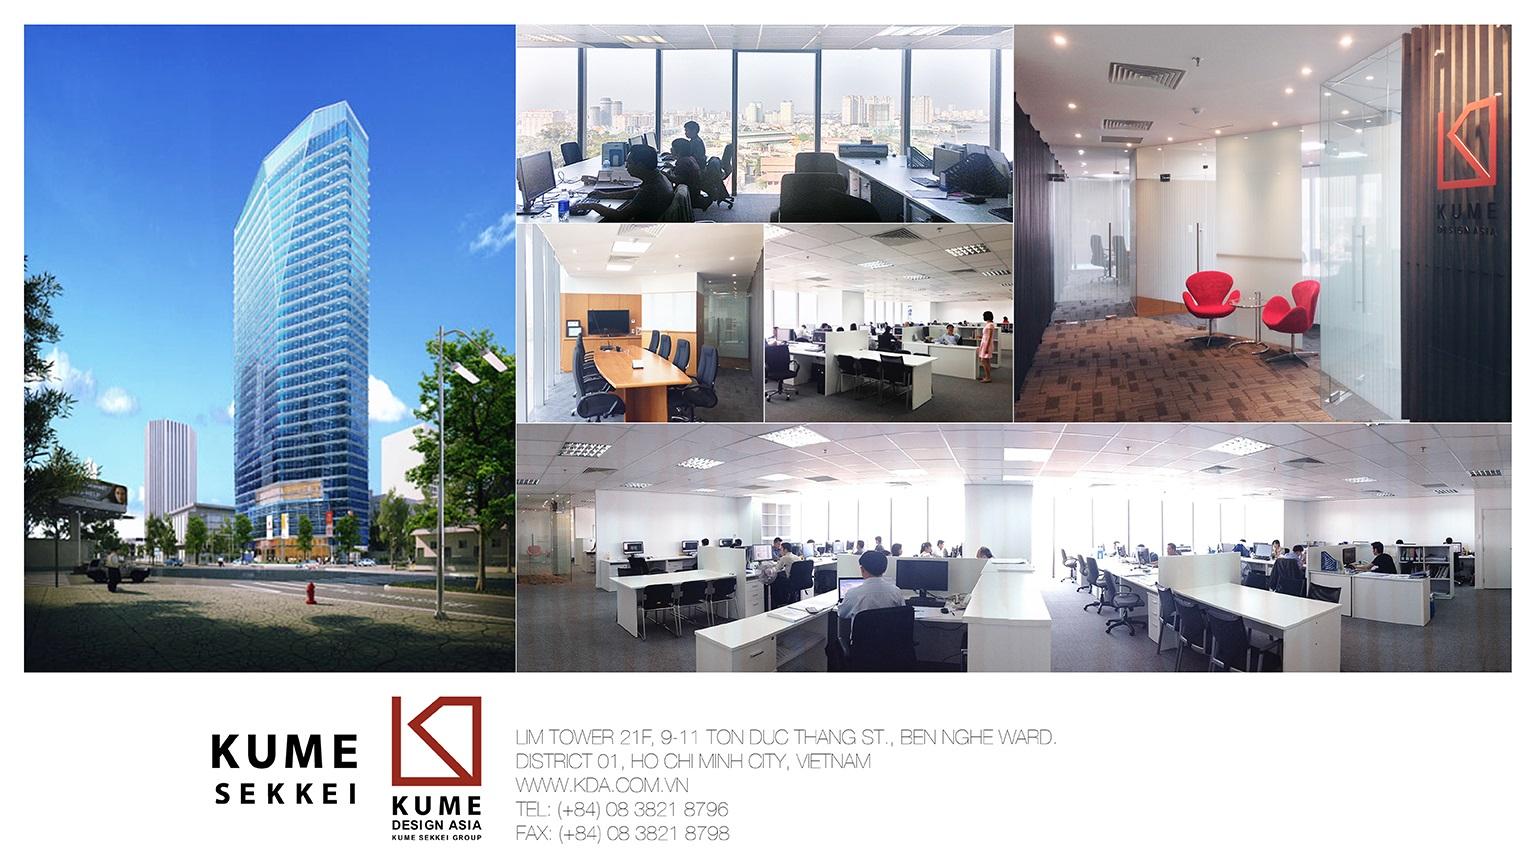 Kume Design Asia Co., Ltd